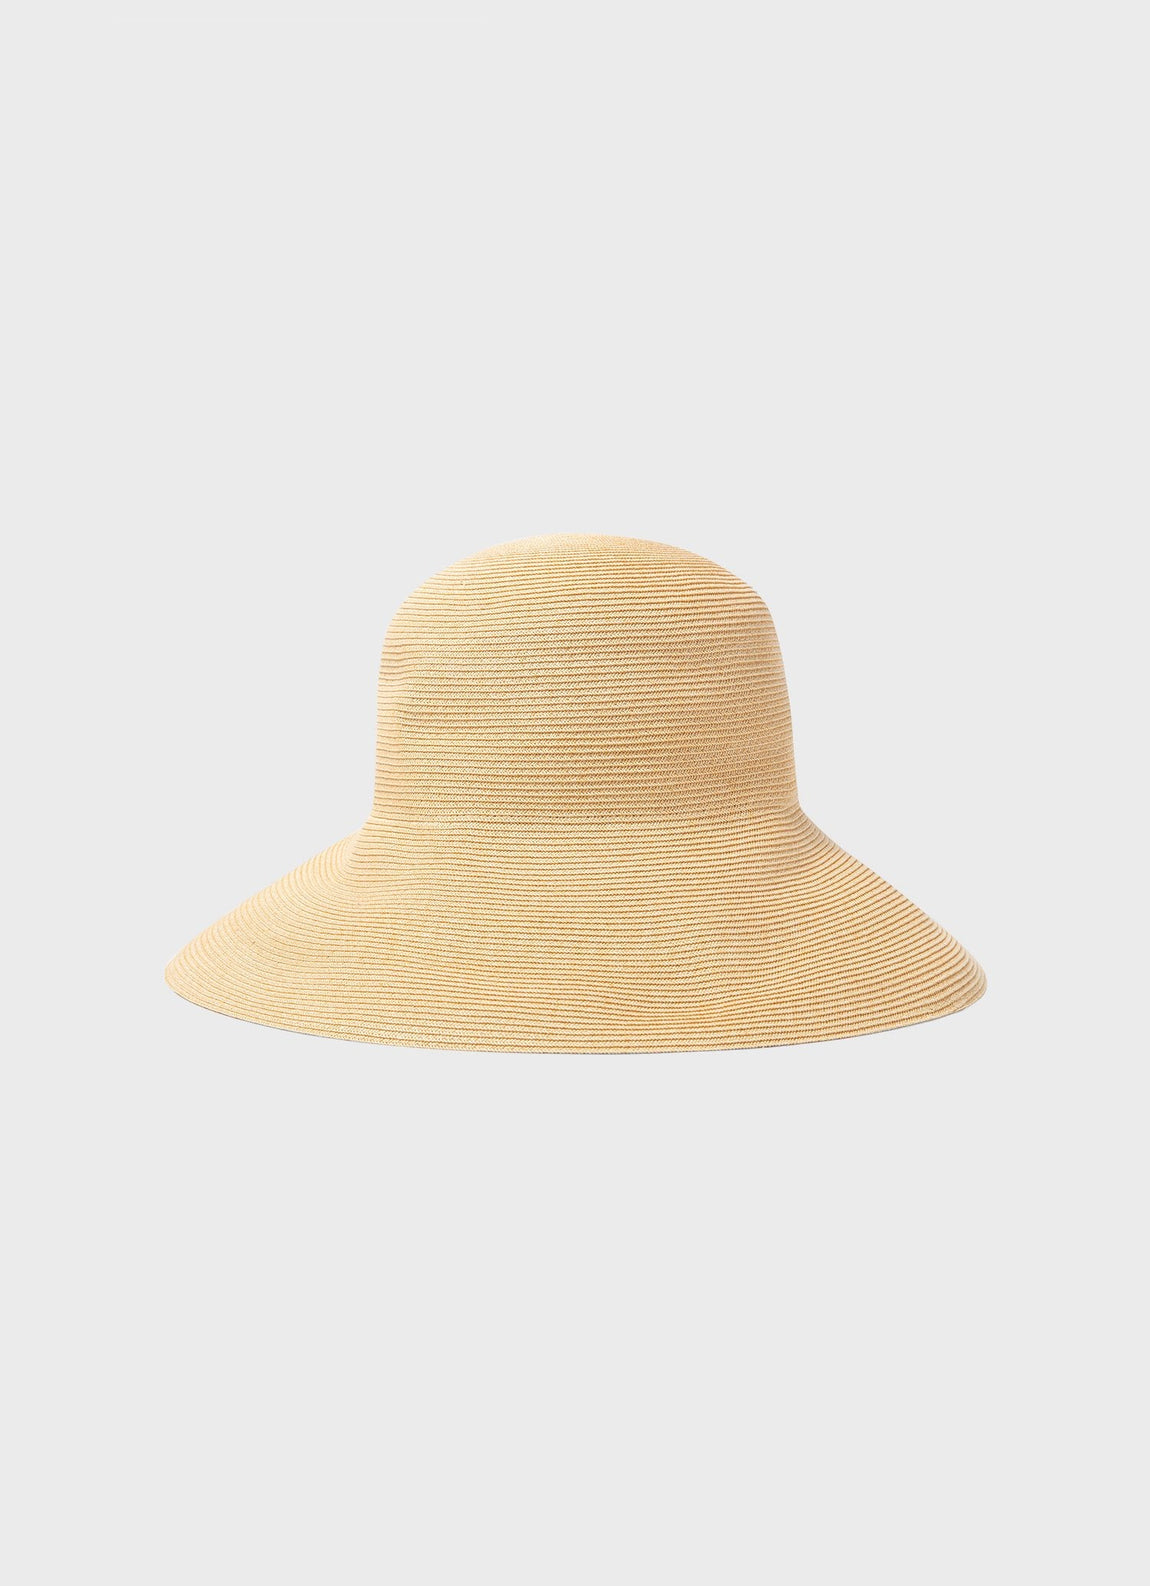 Sunspel and Kijima Takayuki Paper Hat in Natural